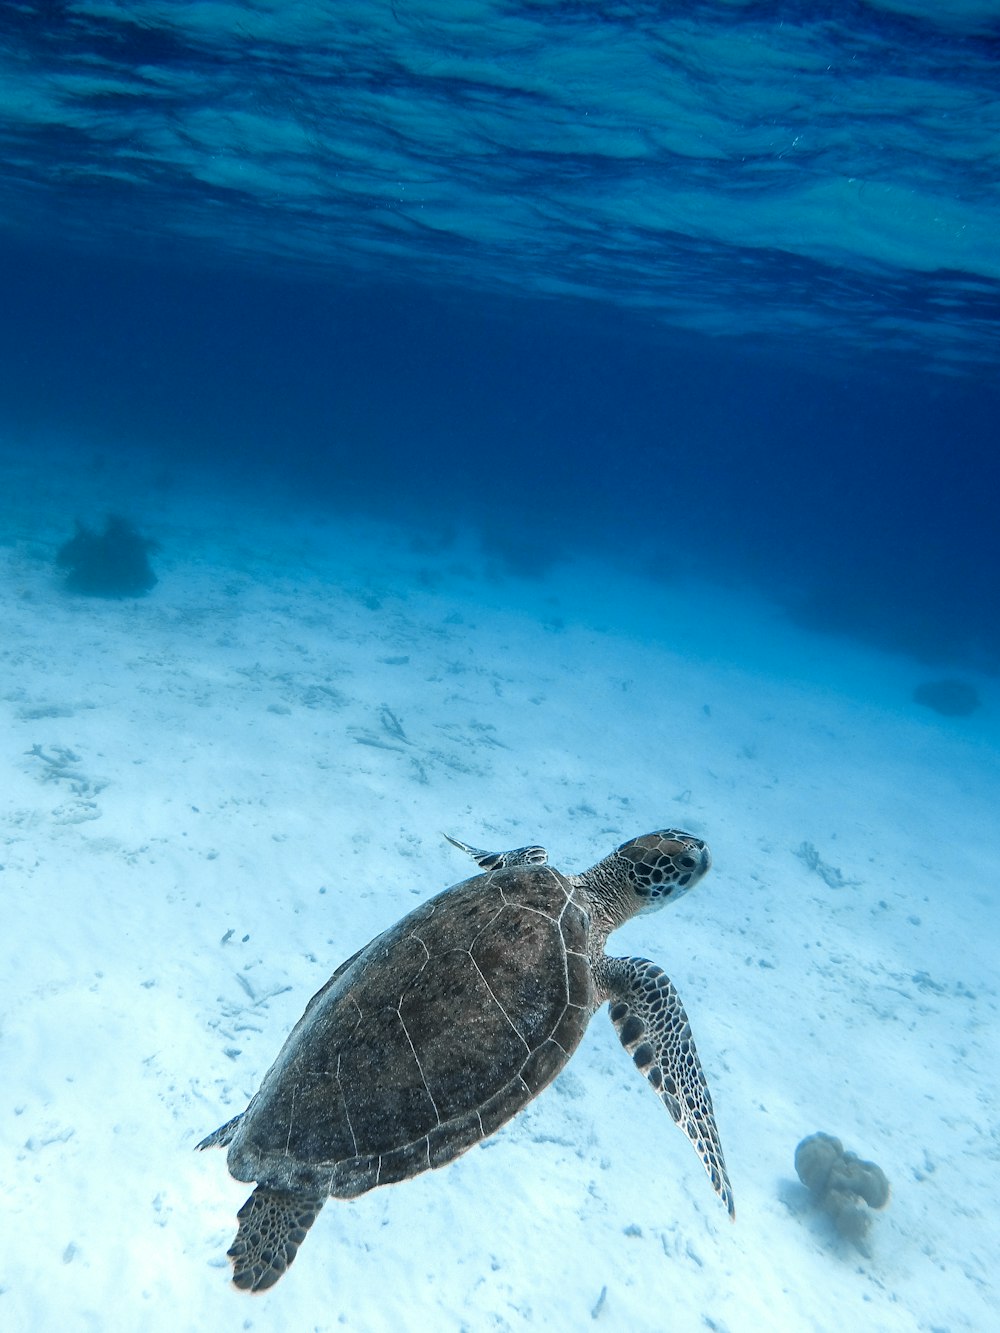 tartaruga preta e marrom debaixo d'água